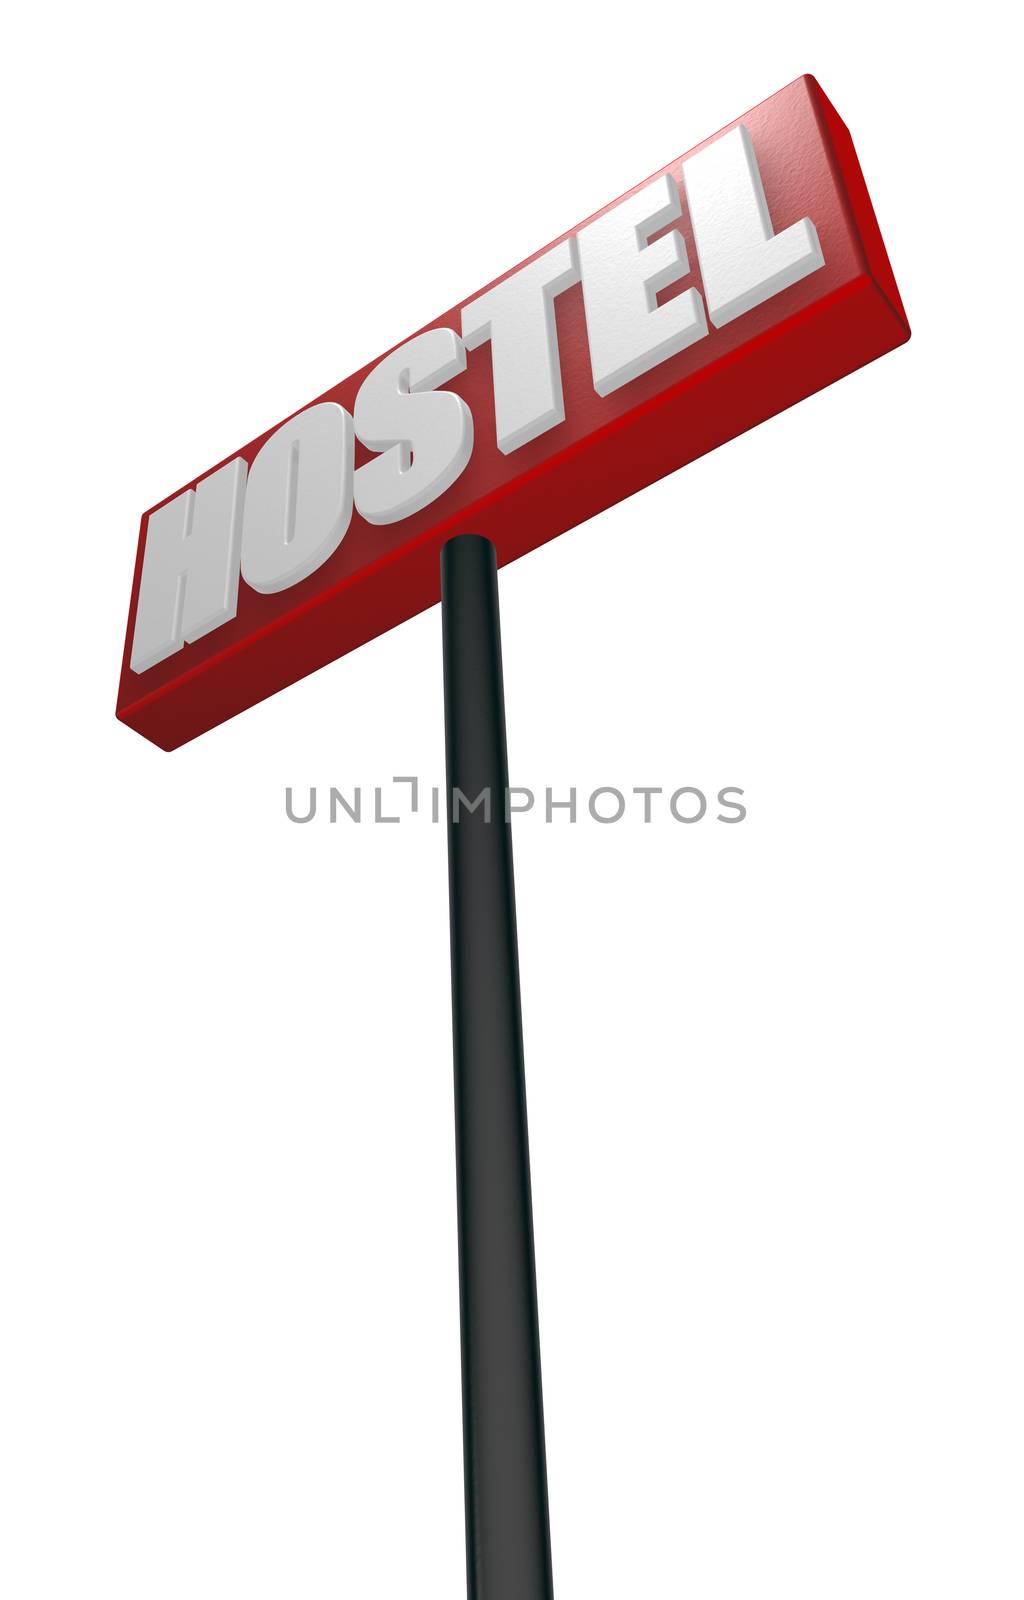 hostel sign on white background - 3d illustration